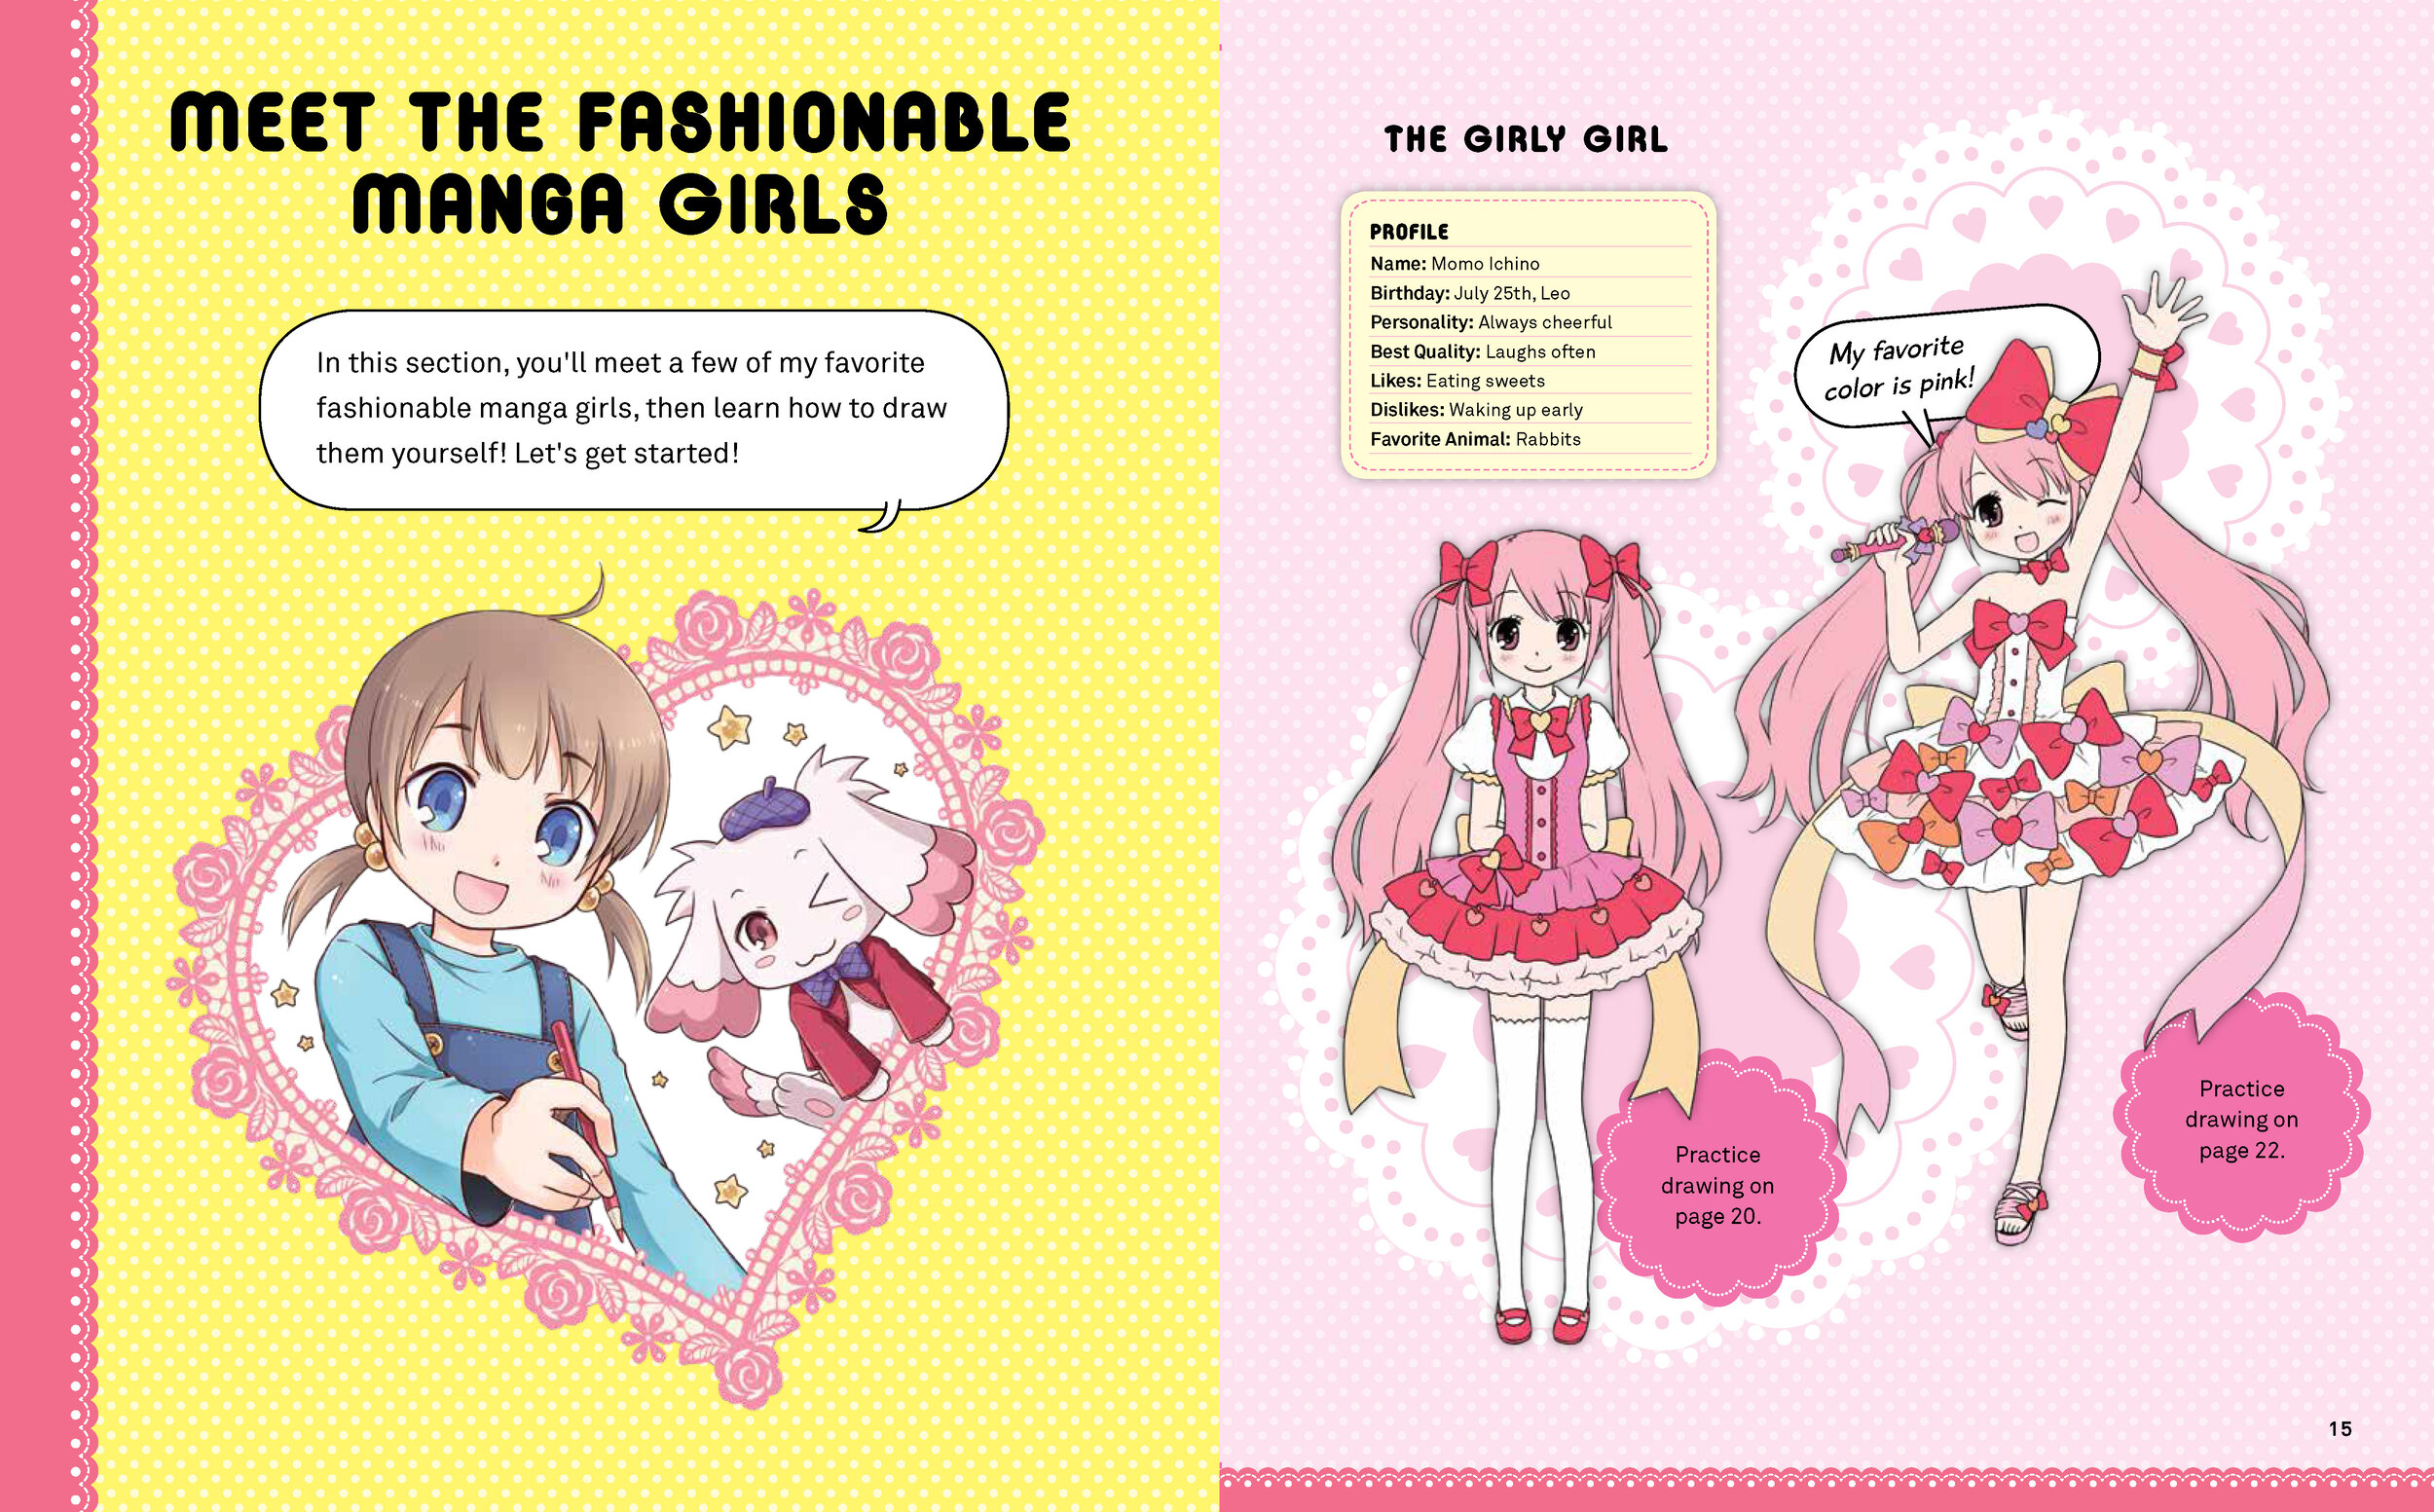 Draw Fashionable Manga Girls 14.15.jpg